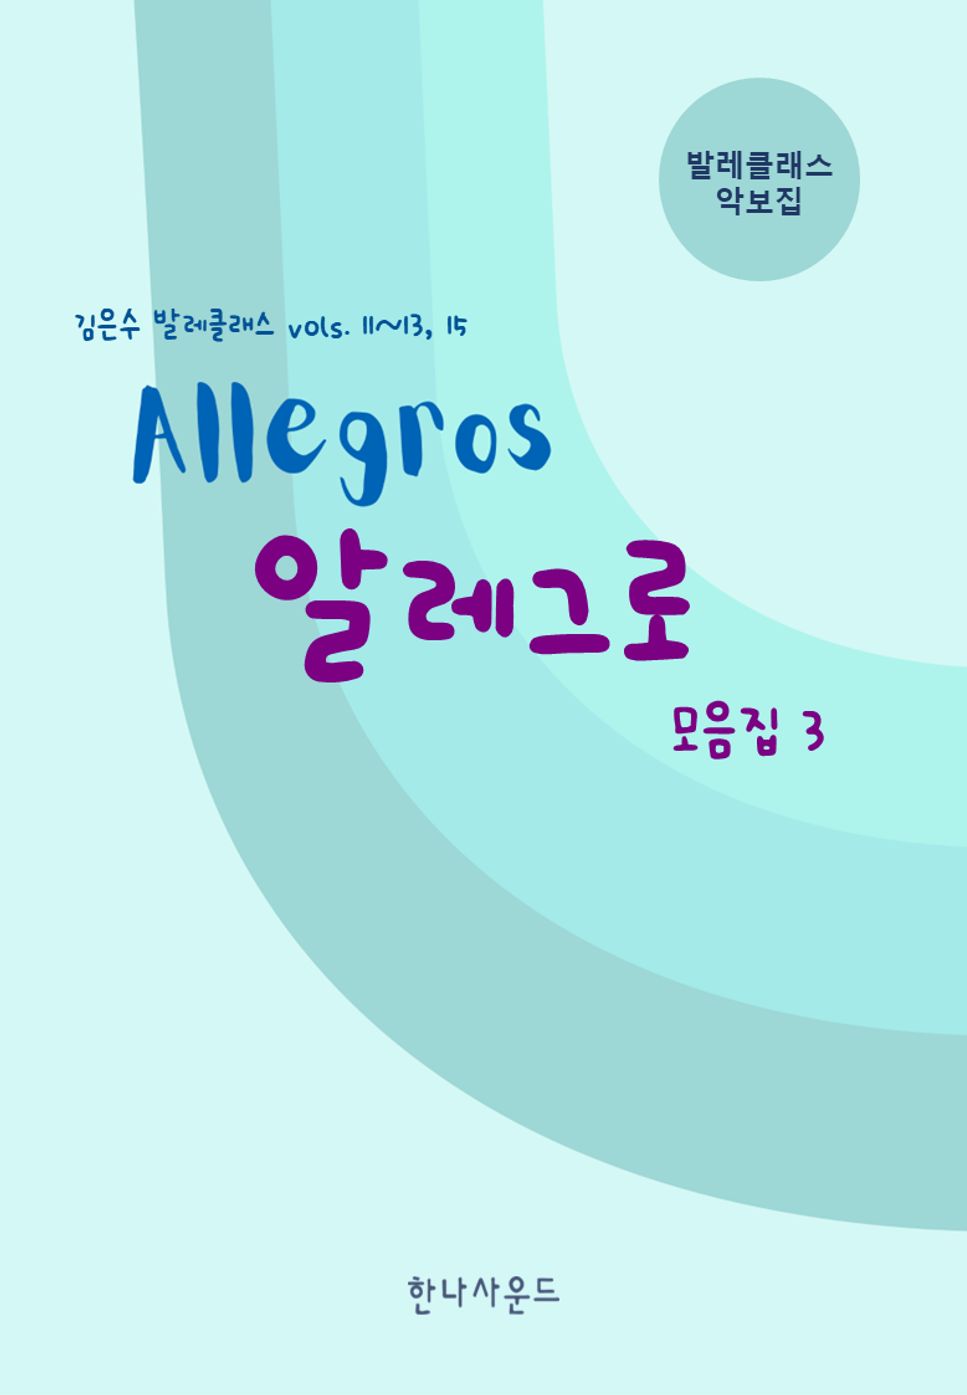 F. Chopin - Medium Allegro Ⅱ (vol.11) by Eun Soo Kim